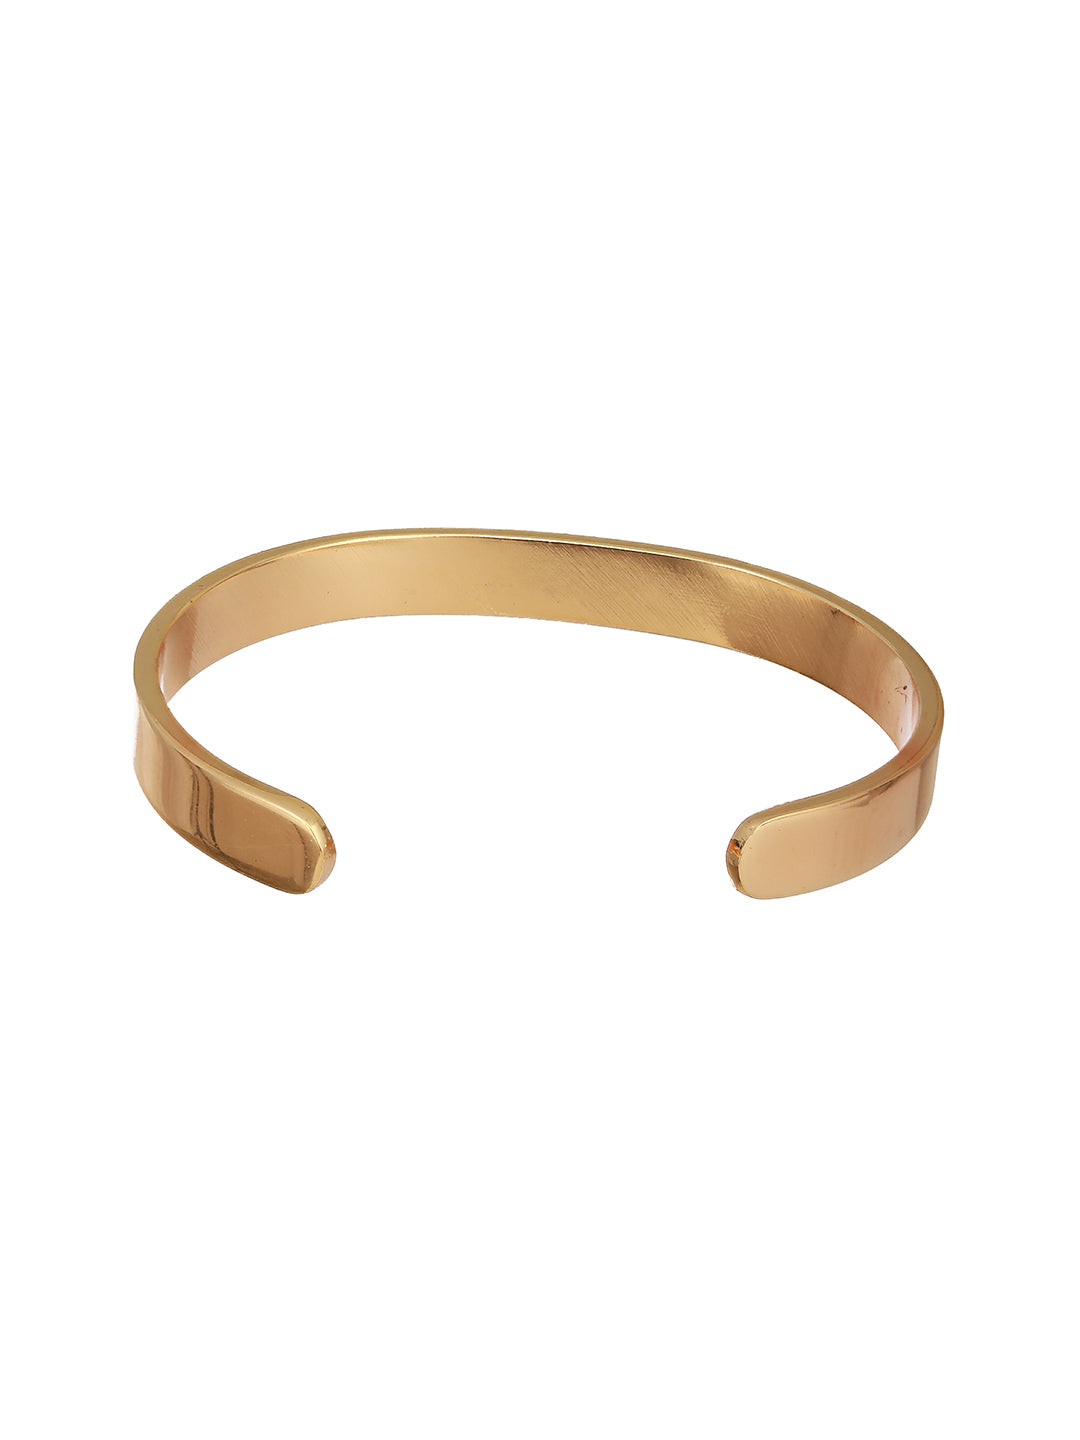 Men Gold-Toned Cuff Bracelet